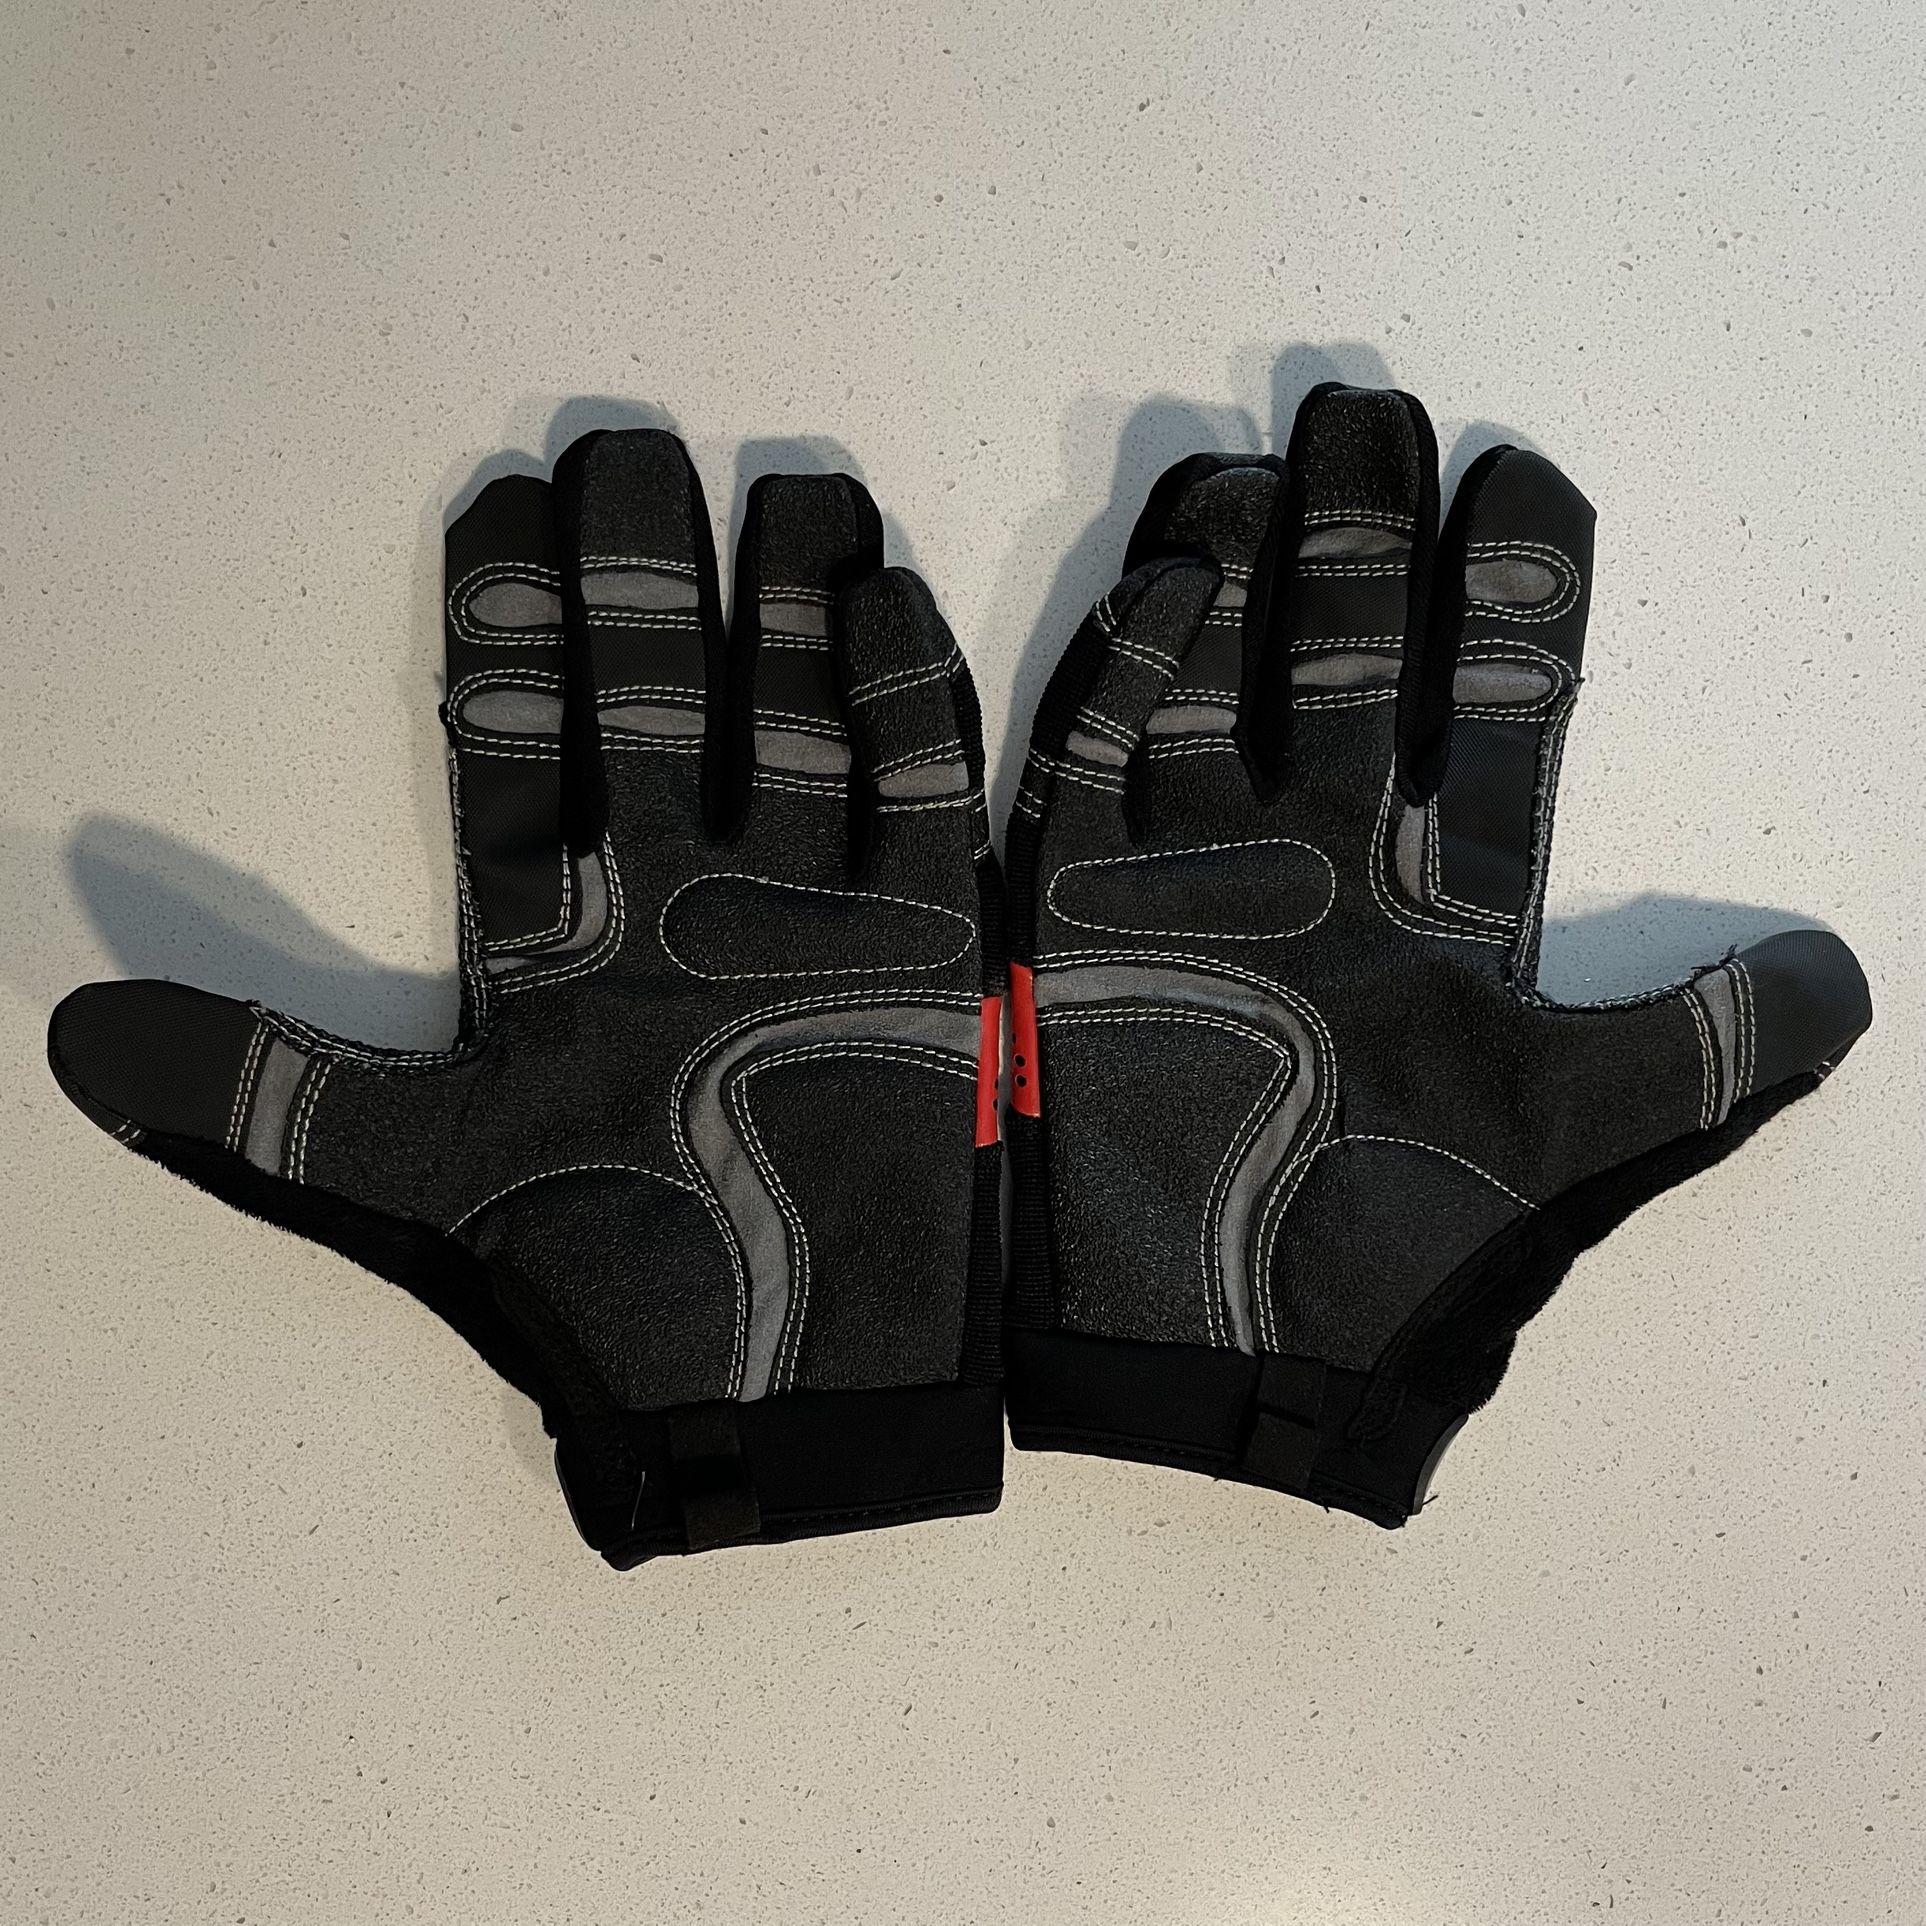 Warn Winching Gloves - Size XL - 88891 Open Package/New